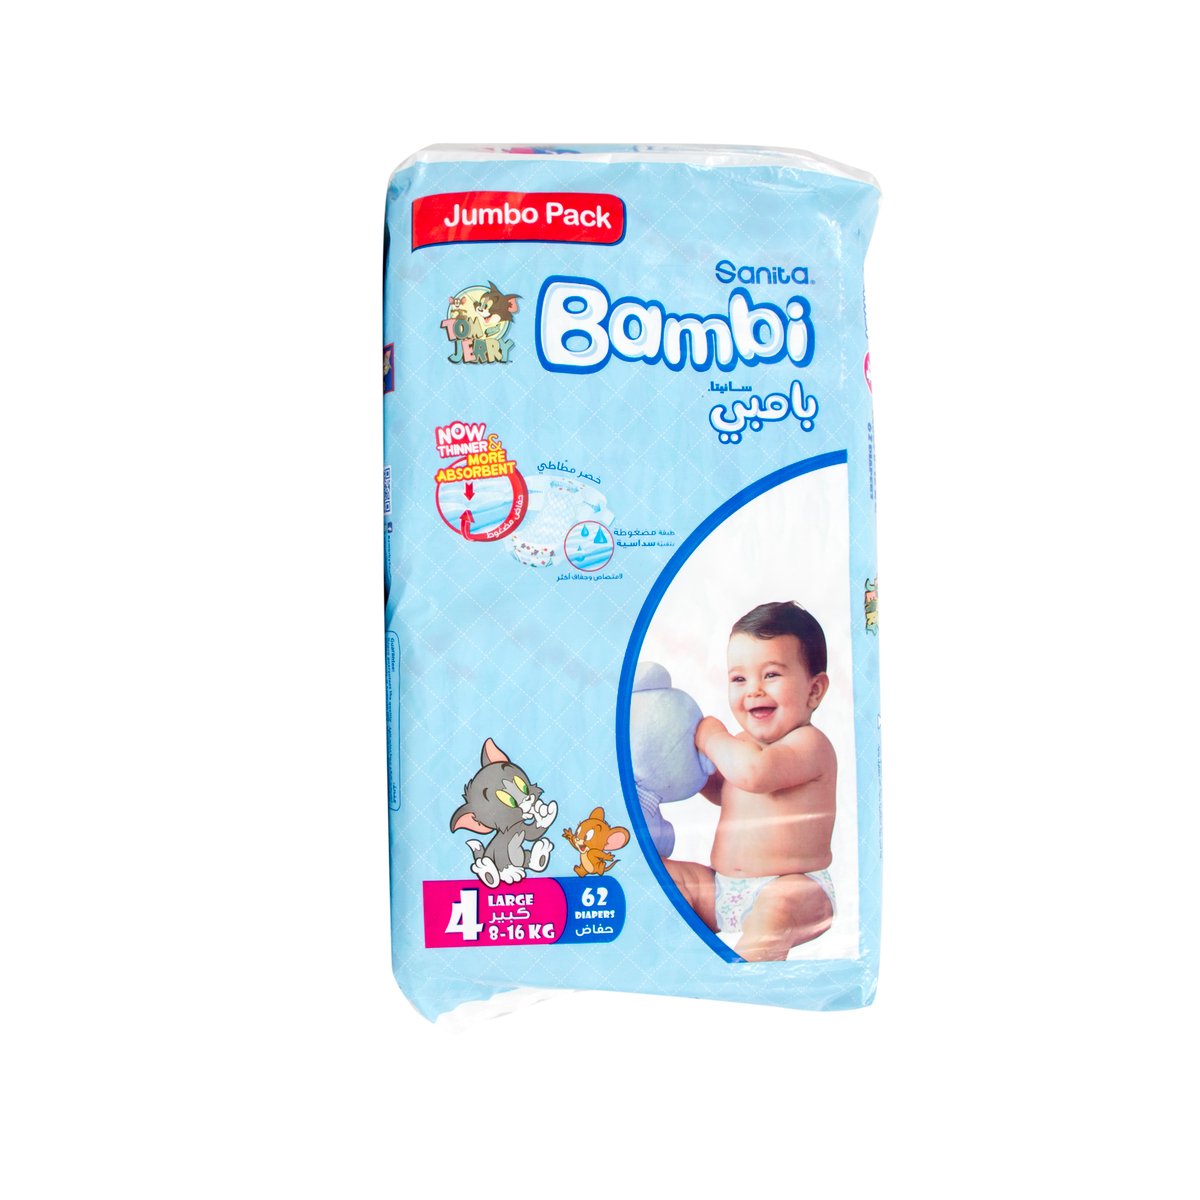 Sanita Bambi Baby Diaper Jumbo Pack Diaper Size 4 Large 8-16kg 62pcs